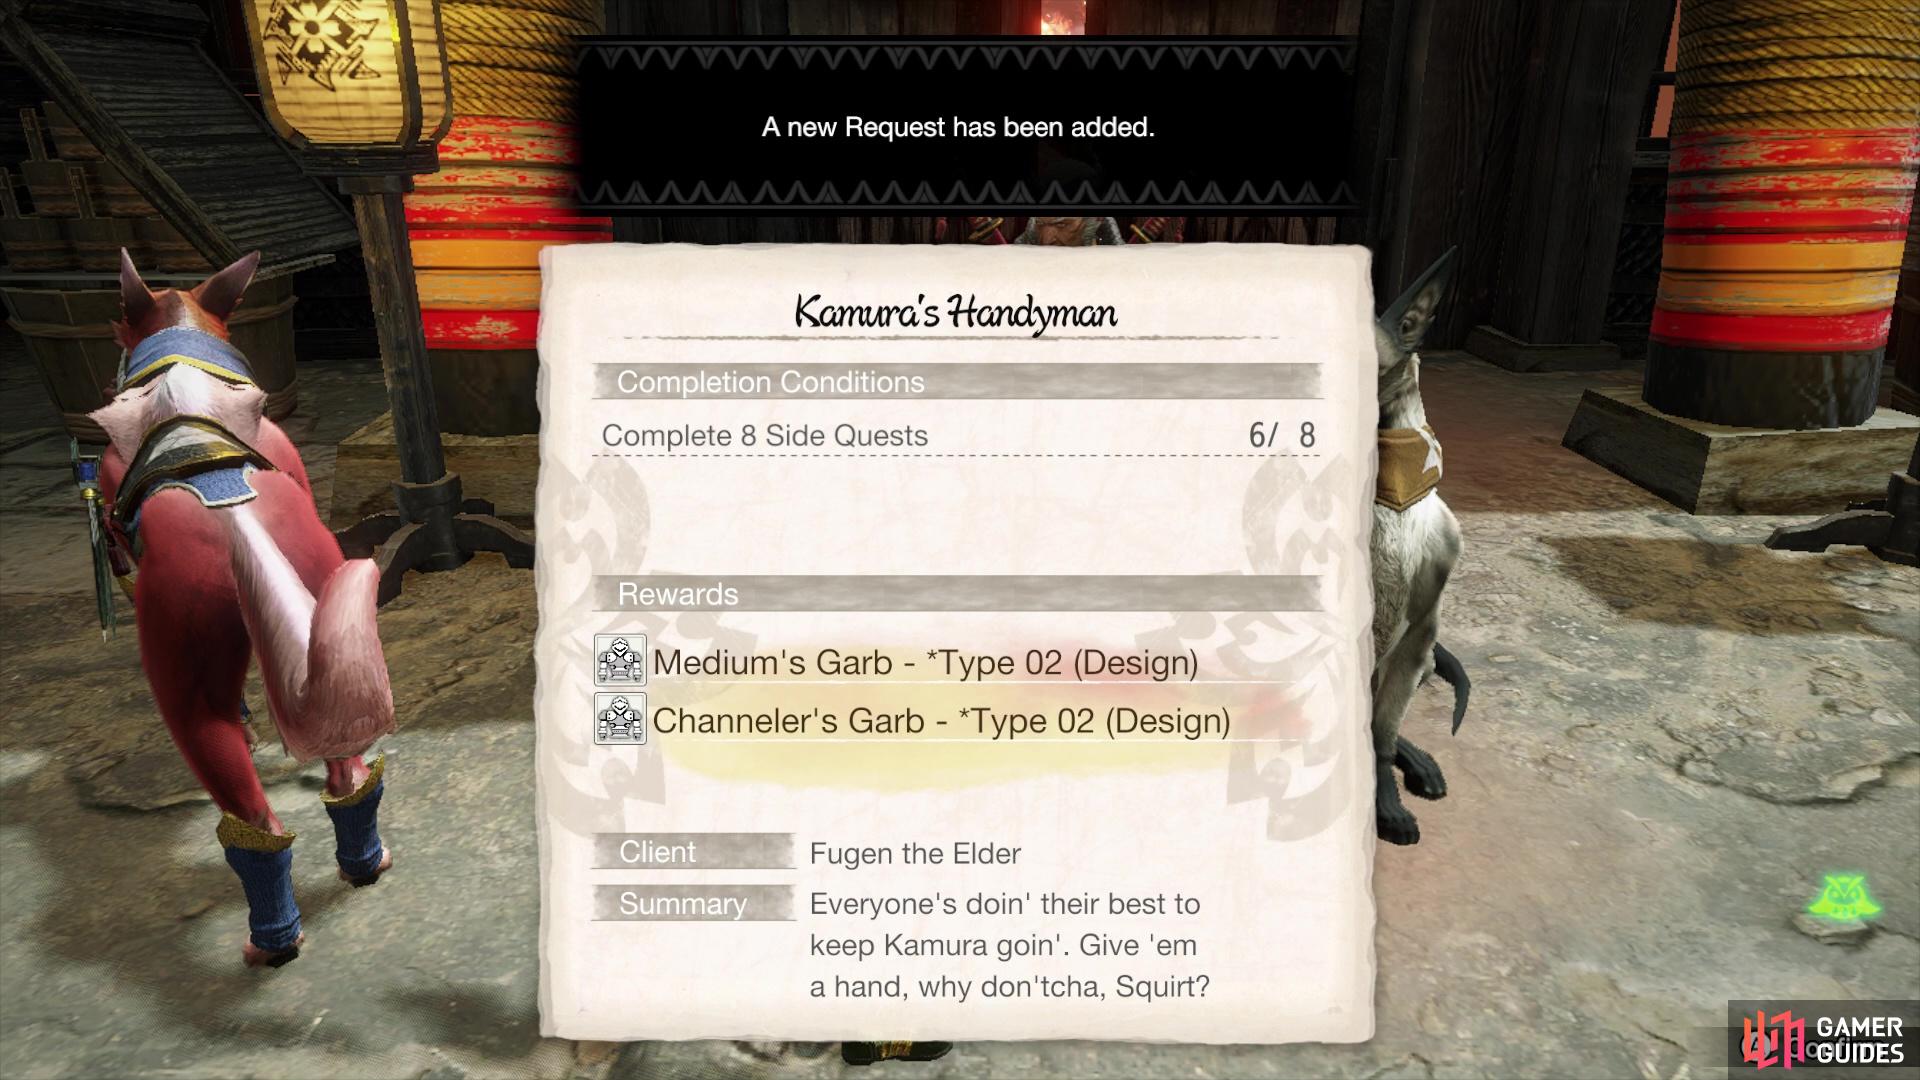 Kamura’s Handyman is given by Fugen the Elder.